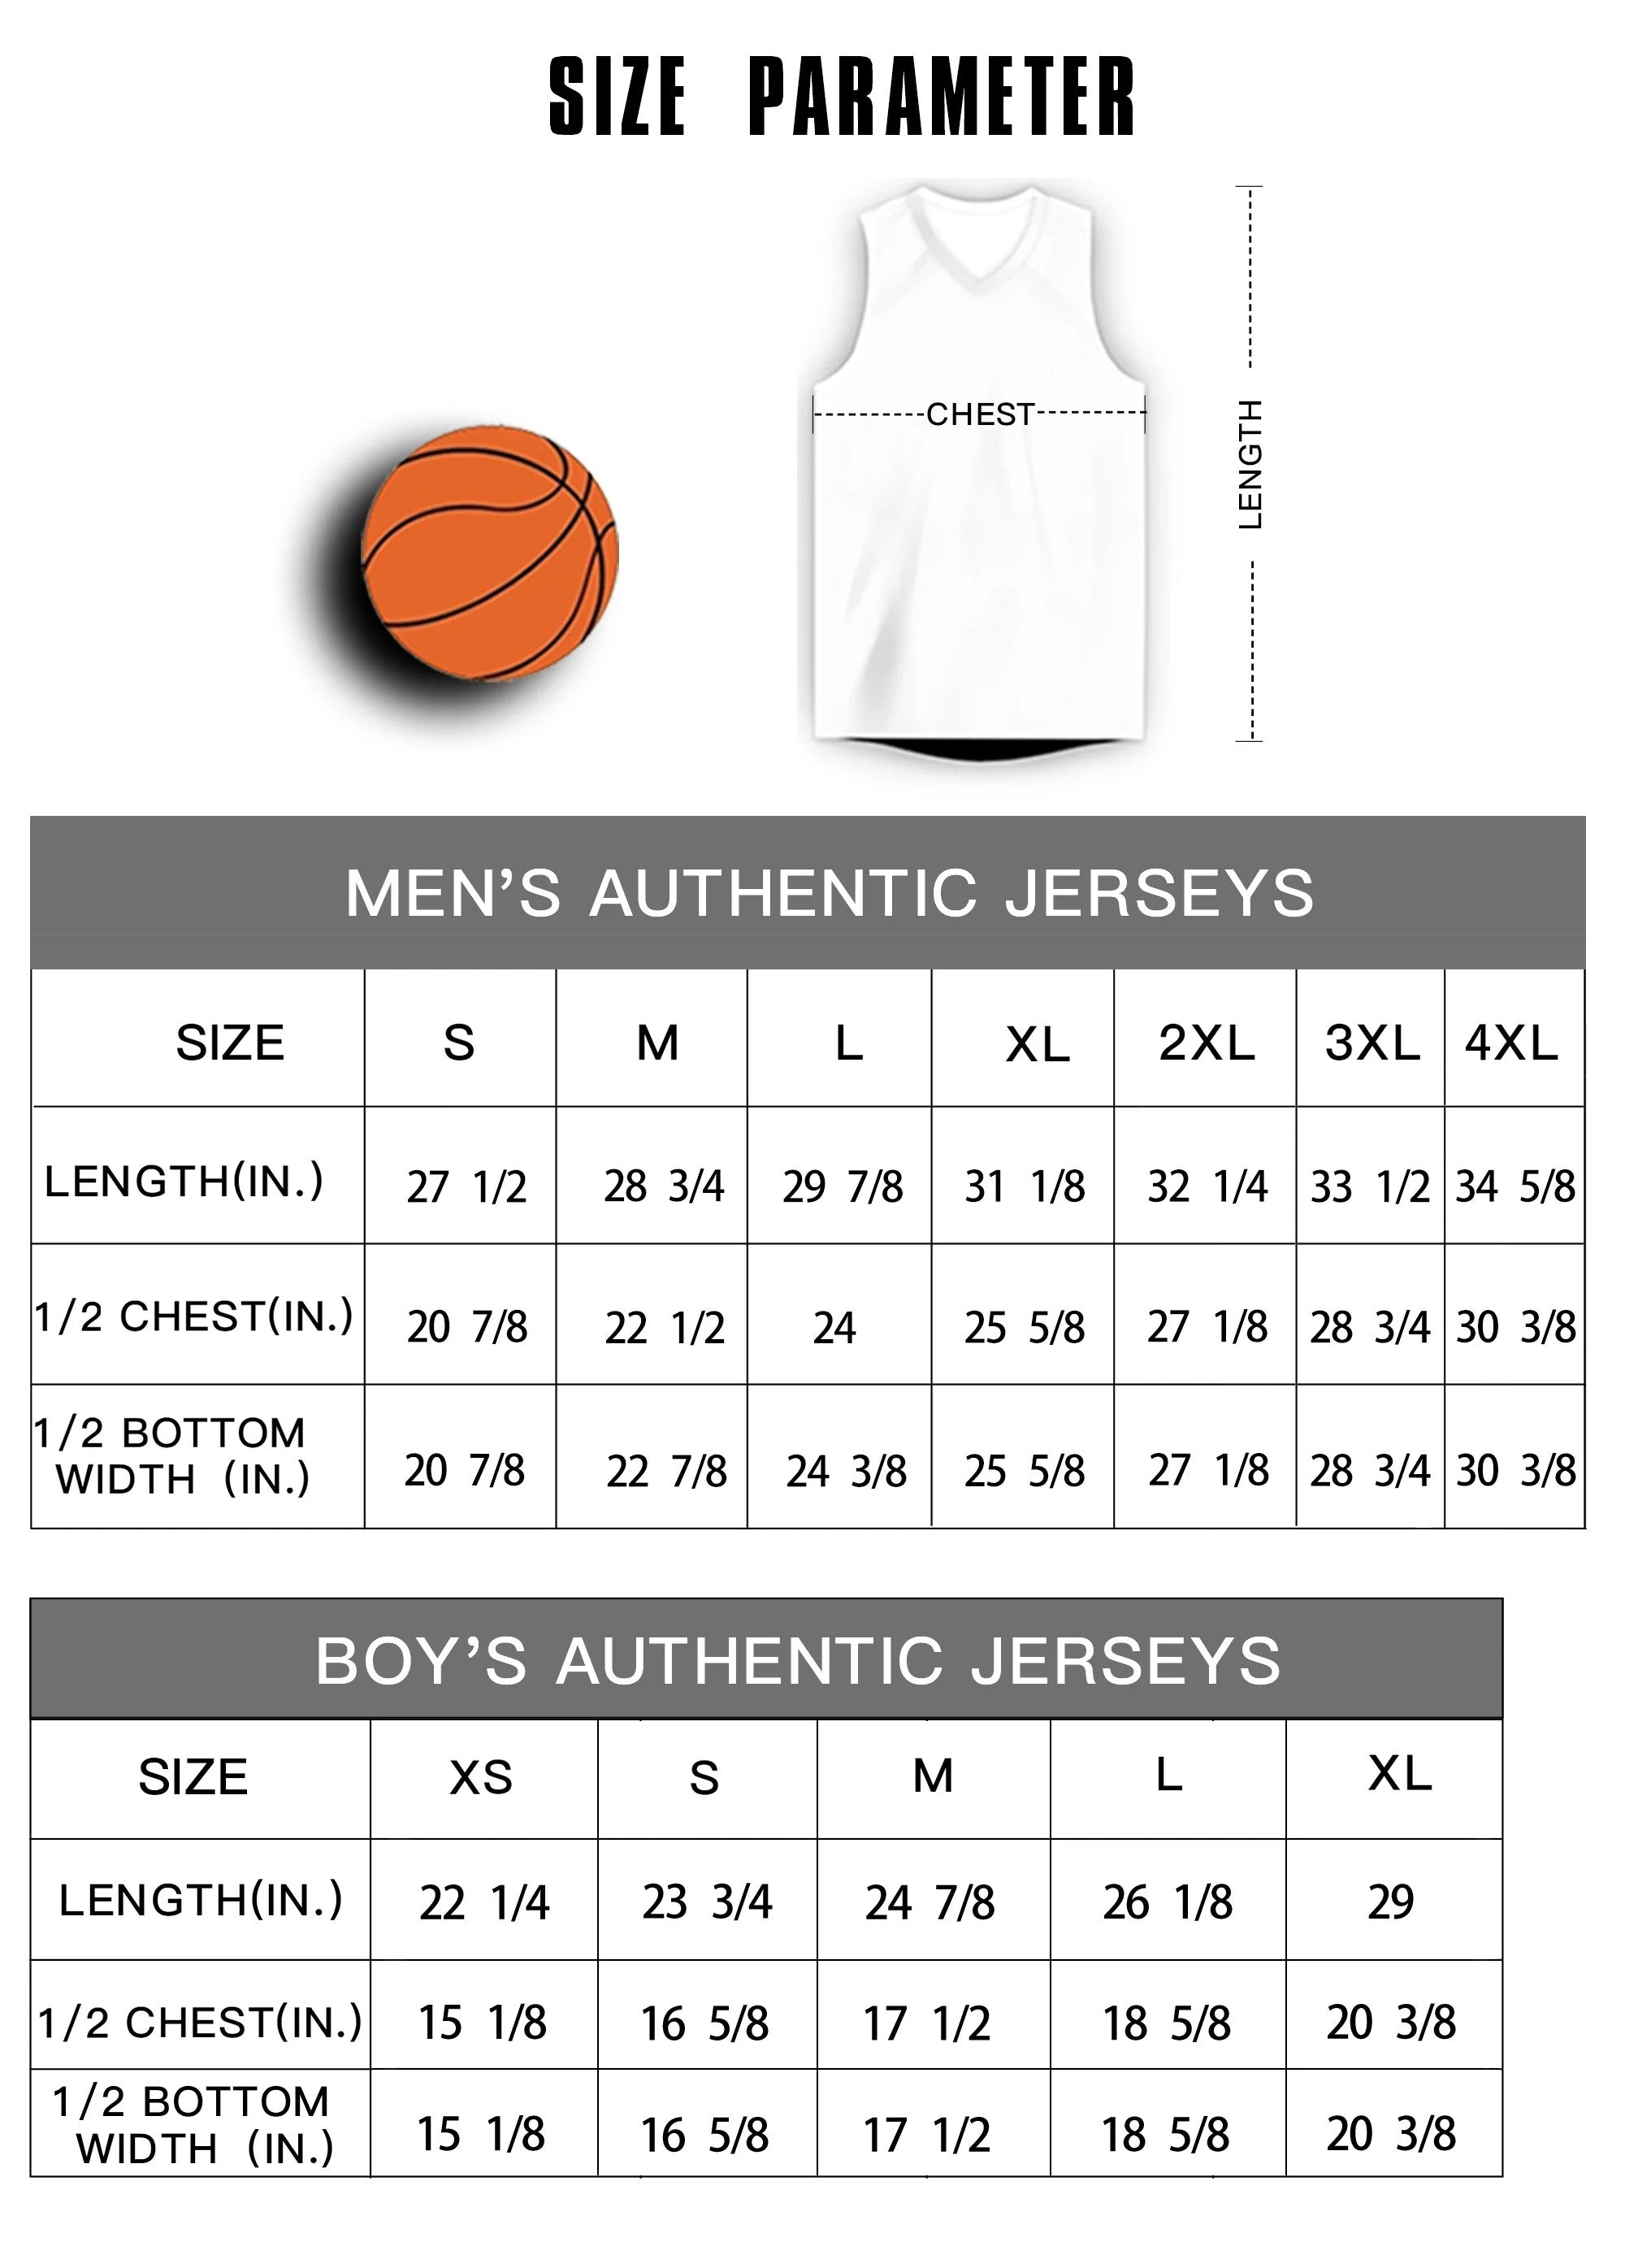 FANSIDEA Custom Basketball Jersey Yellow Black Round Neck Sublimation Basketball Suit Jersey Men's Size:3XL